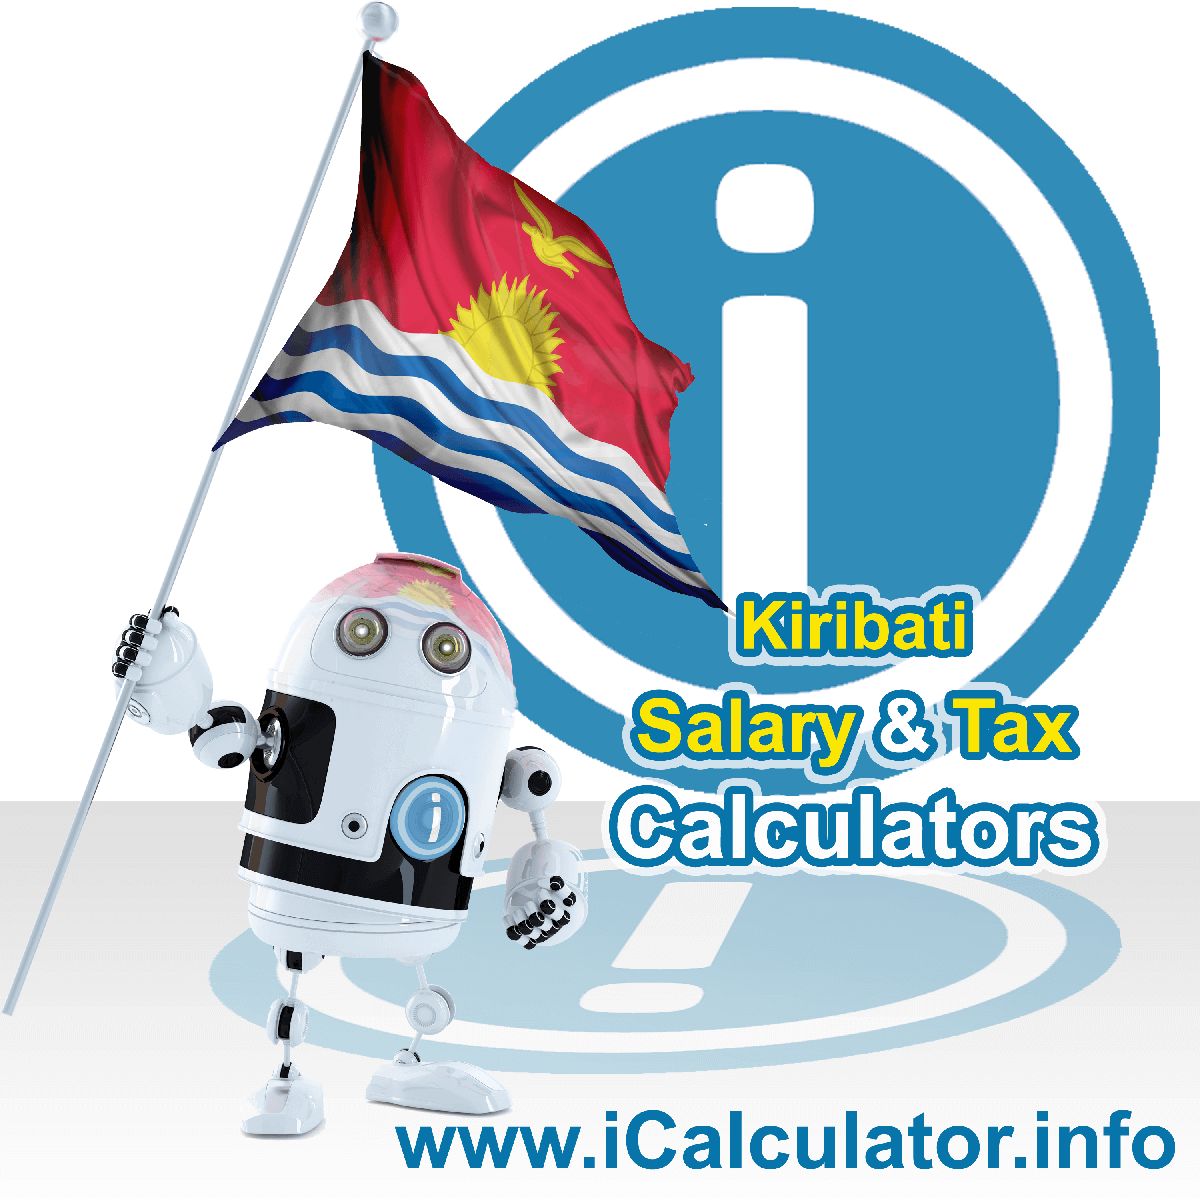 Kiribati Tax Calculator. This image shows the Kiribati flag and information relating to the tax formula for the Kiribati Salary Calculator